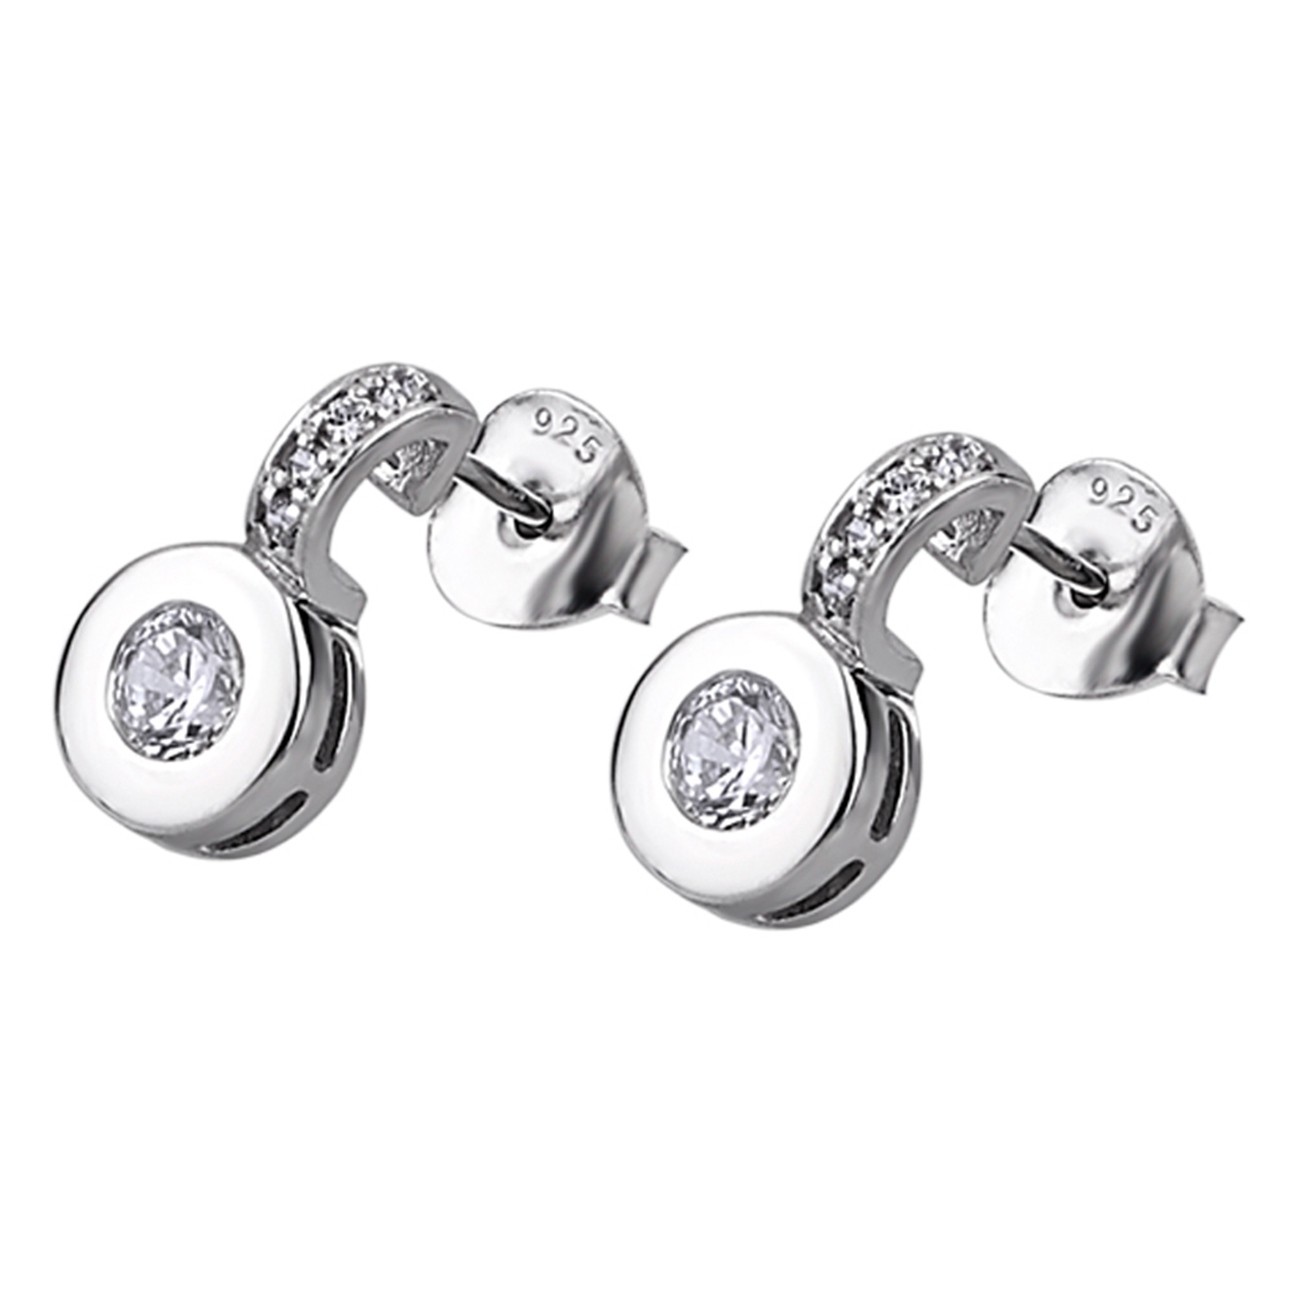 LOTUS Silver - Damen Ohrring Zirkonia weiß Ohrstecker aus 925 Silber JLP1546-4-1